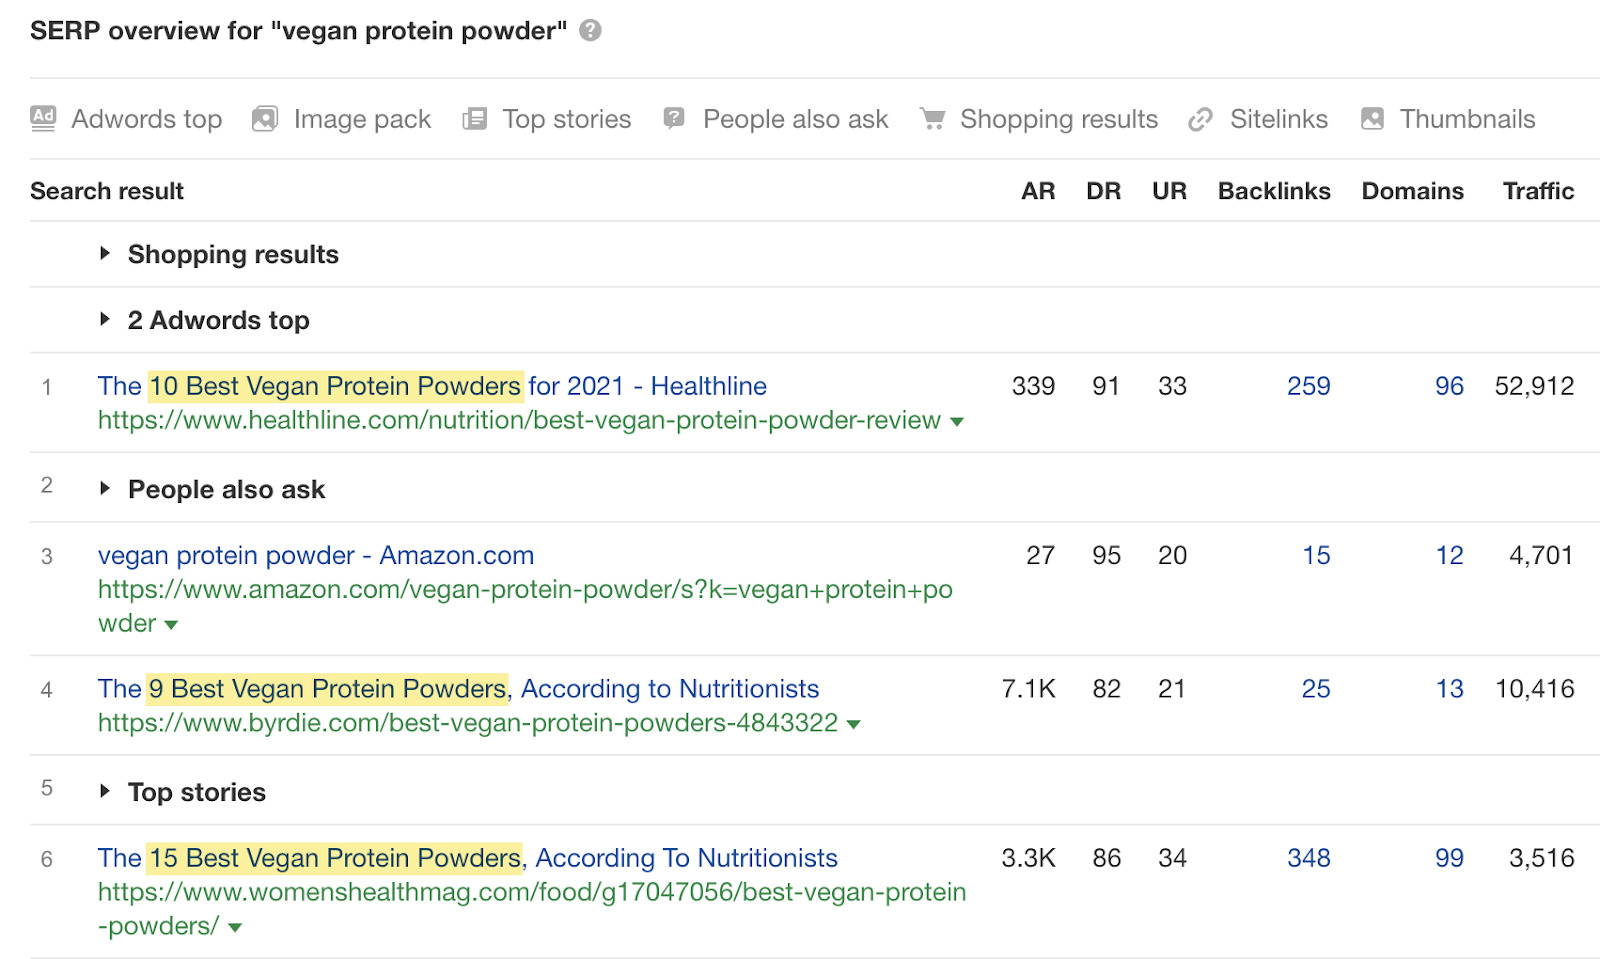 SERP overview for "vegan protein powder"